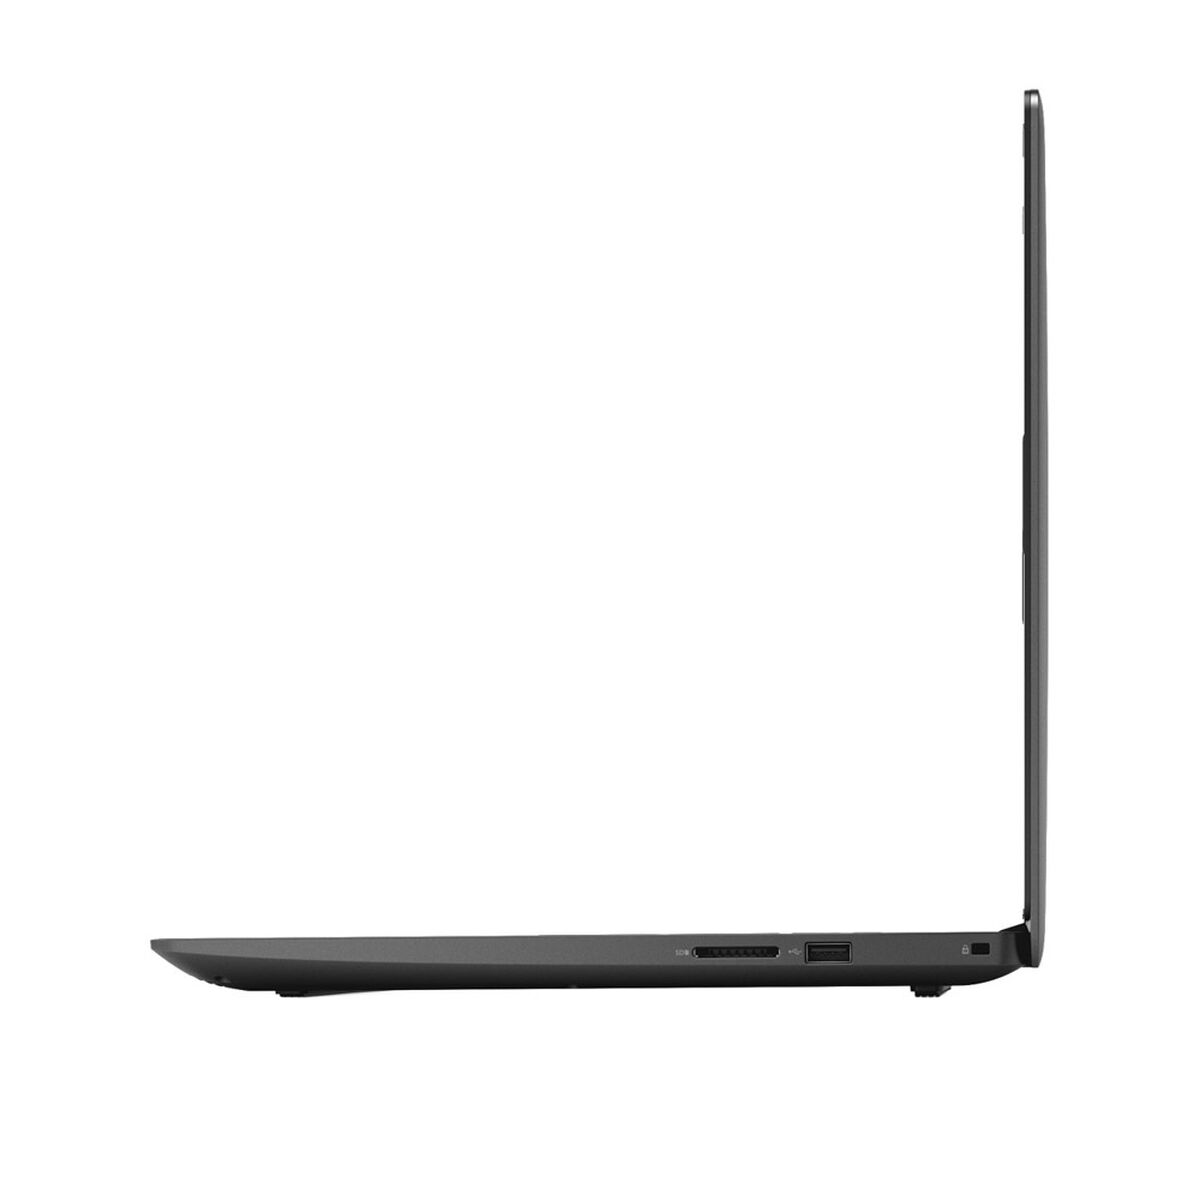 Notebook Gamer Dell 3579-5467 Core i5-8300H 8GB 1TB 15.6" NVIDIA GTX1050